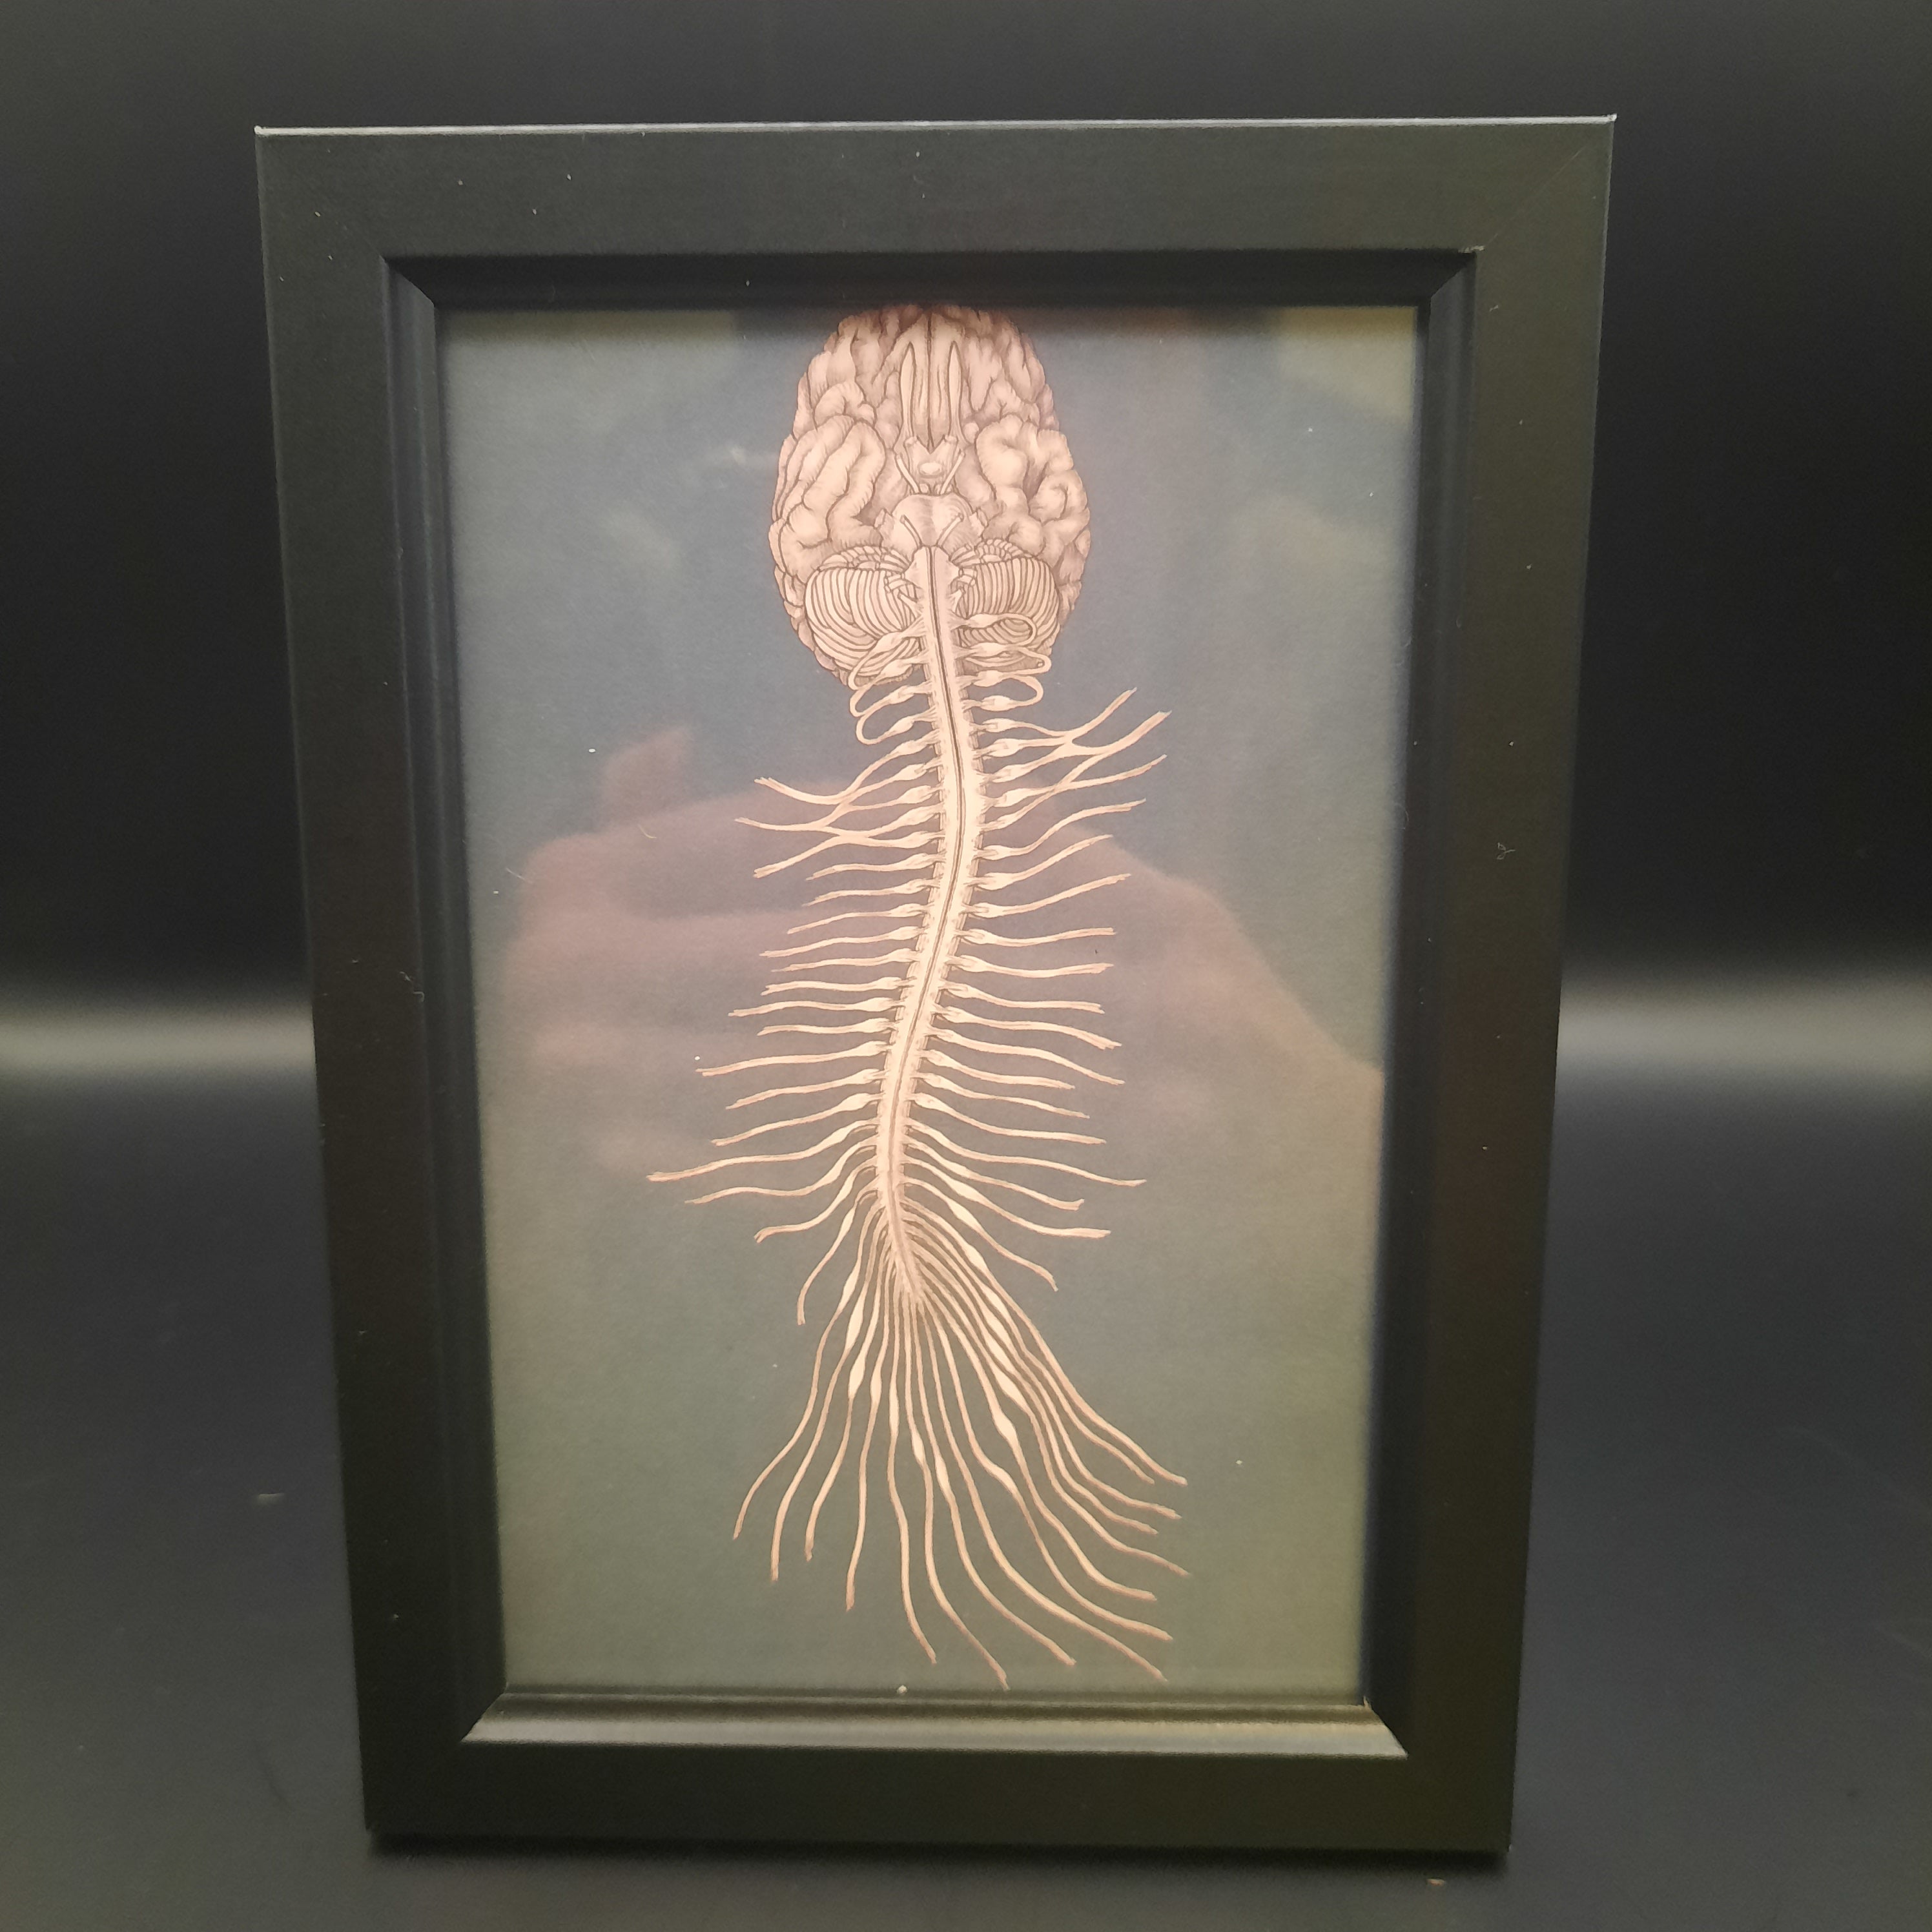 Framed Illustrations (Anatomical and more)